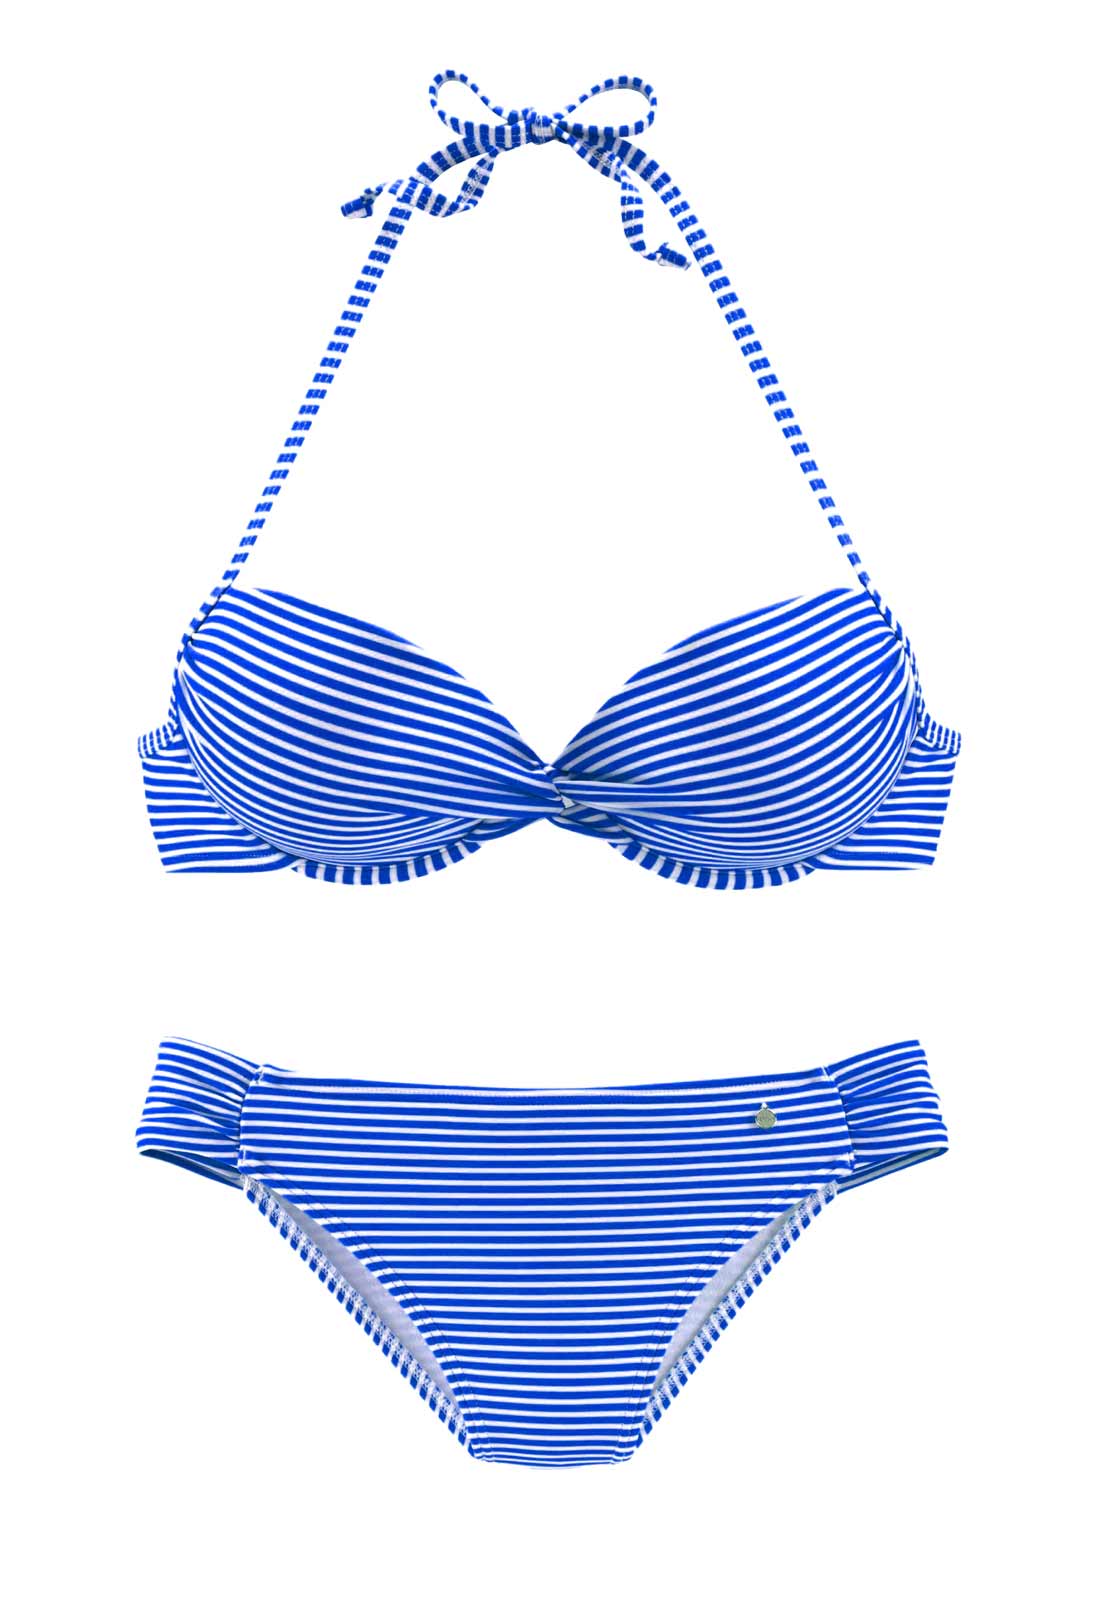 S. Oliver Damen Marken-Push-Up-Bikini, weiß-blau, C-Cup